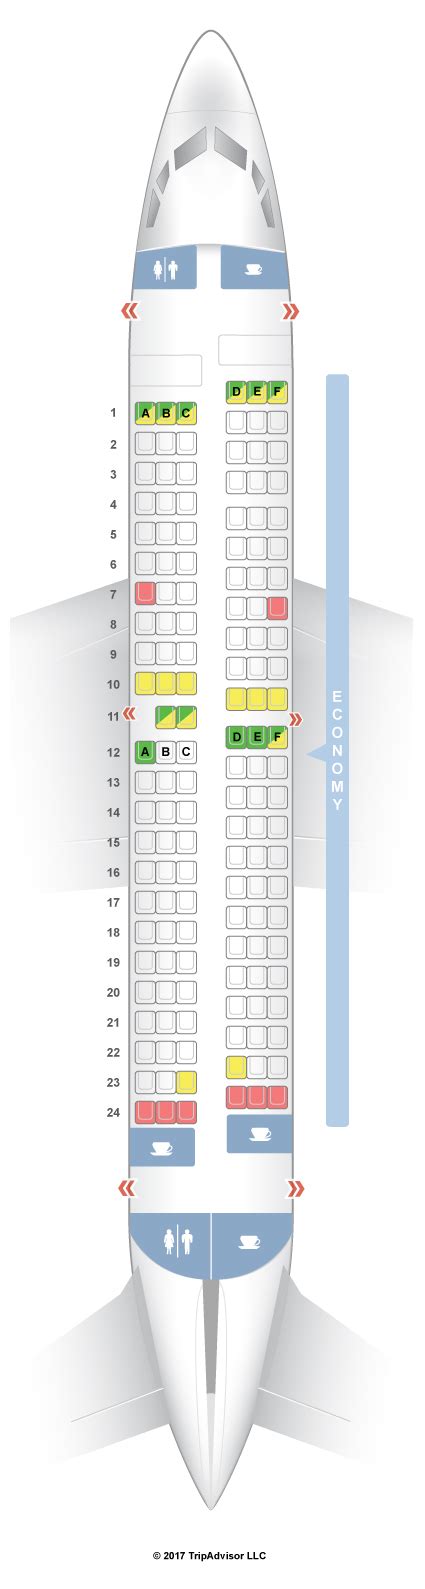 boeing 737-700 southwest seat map